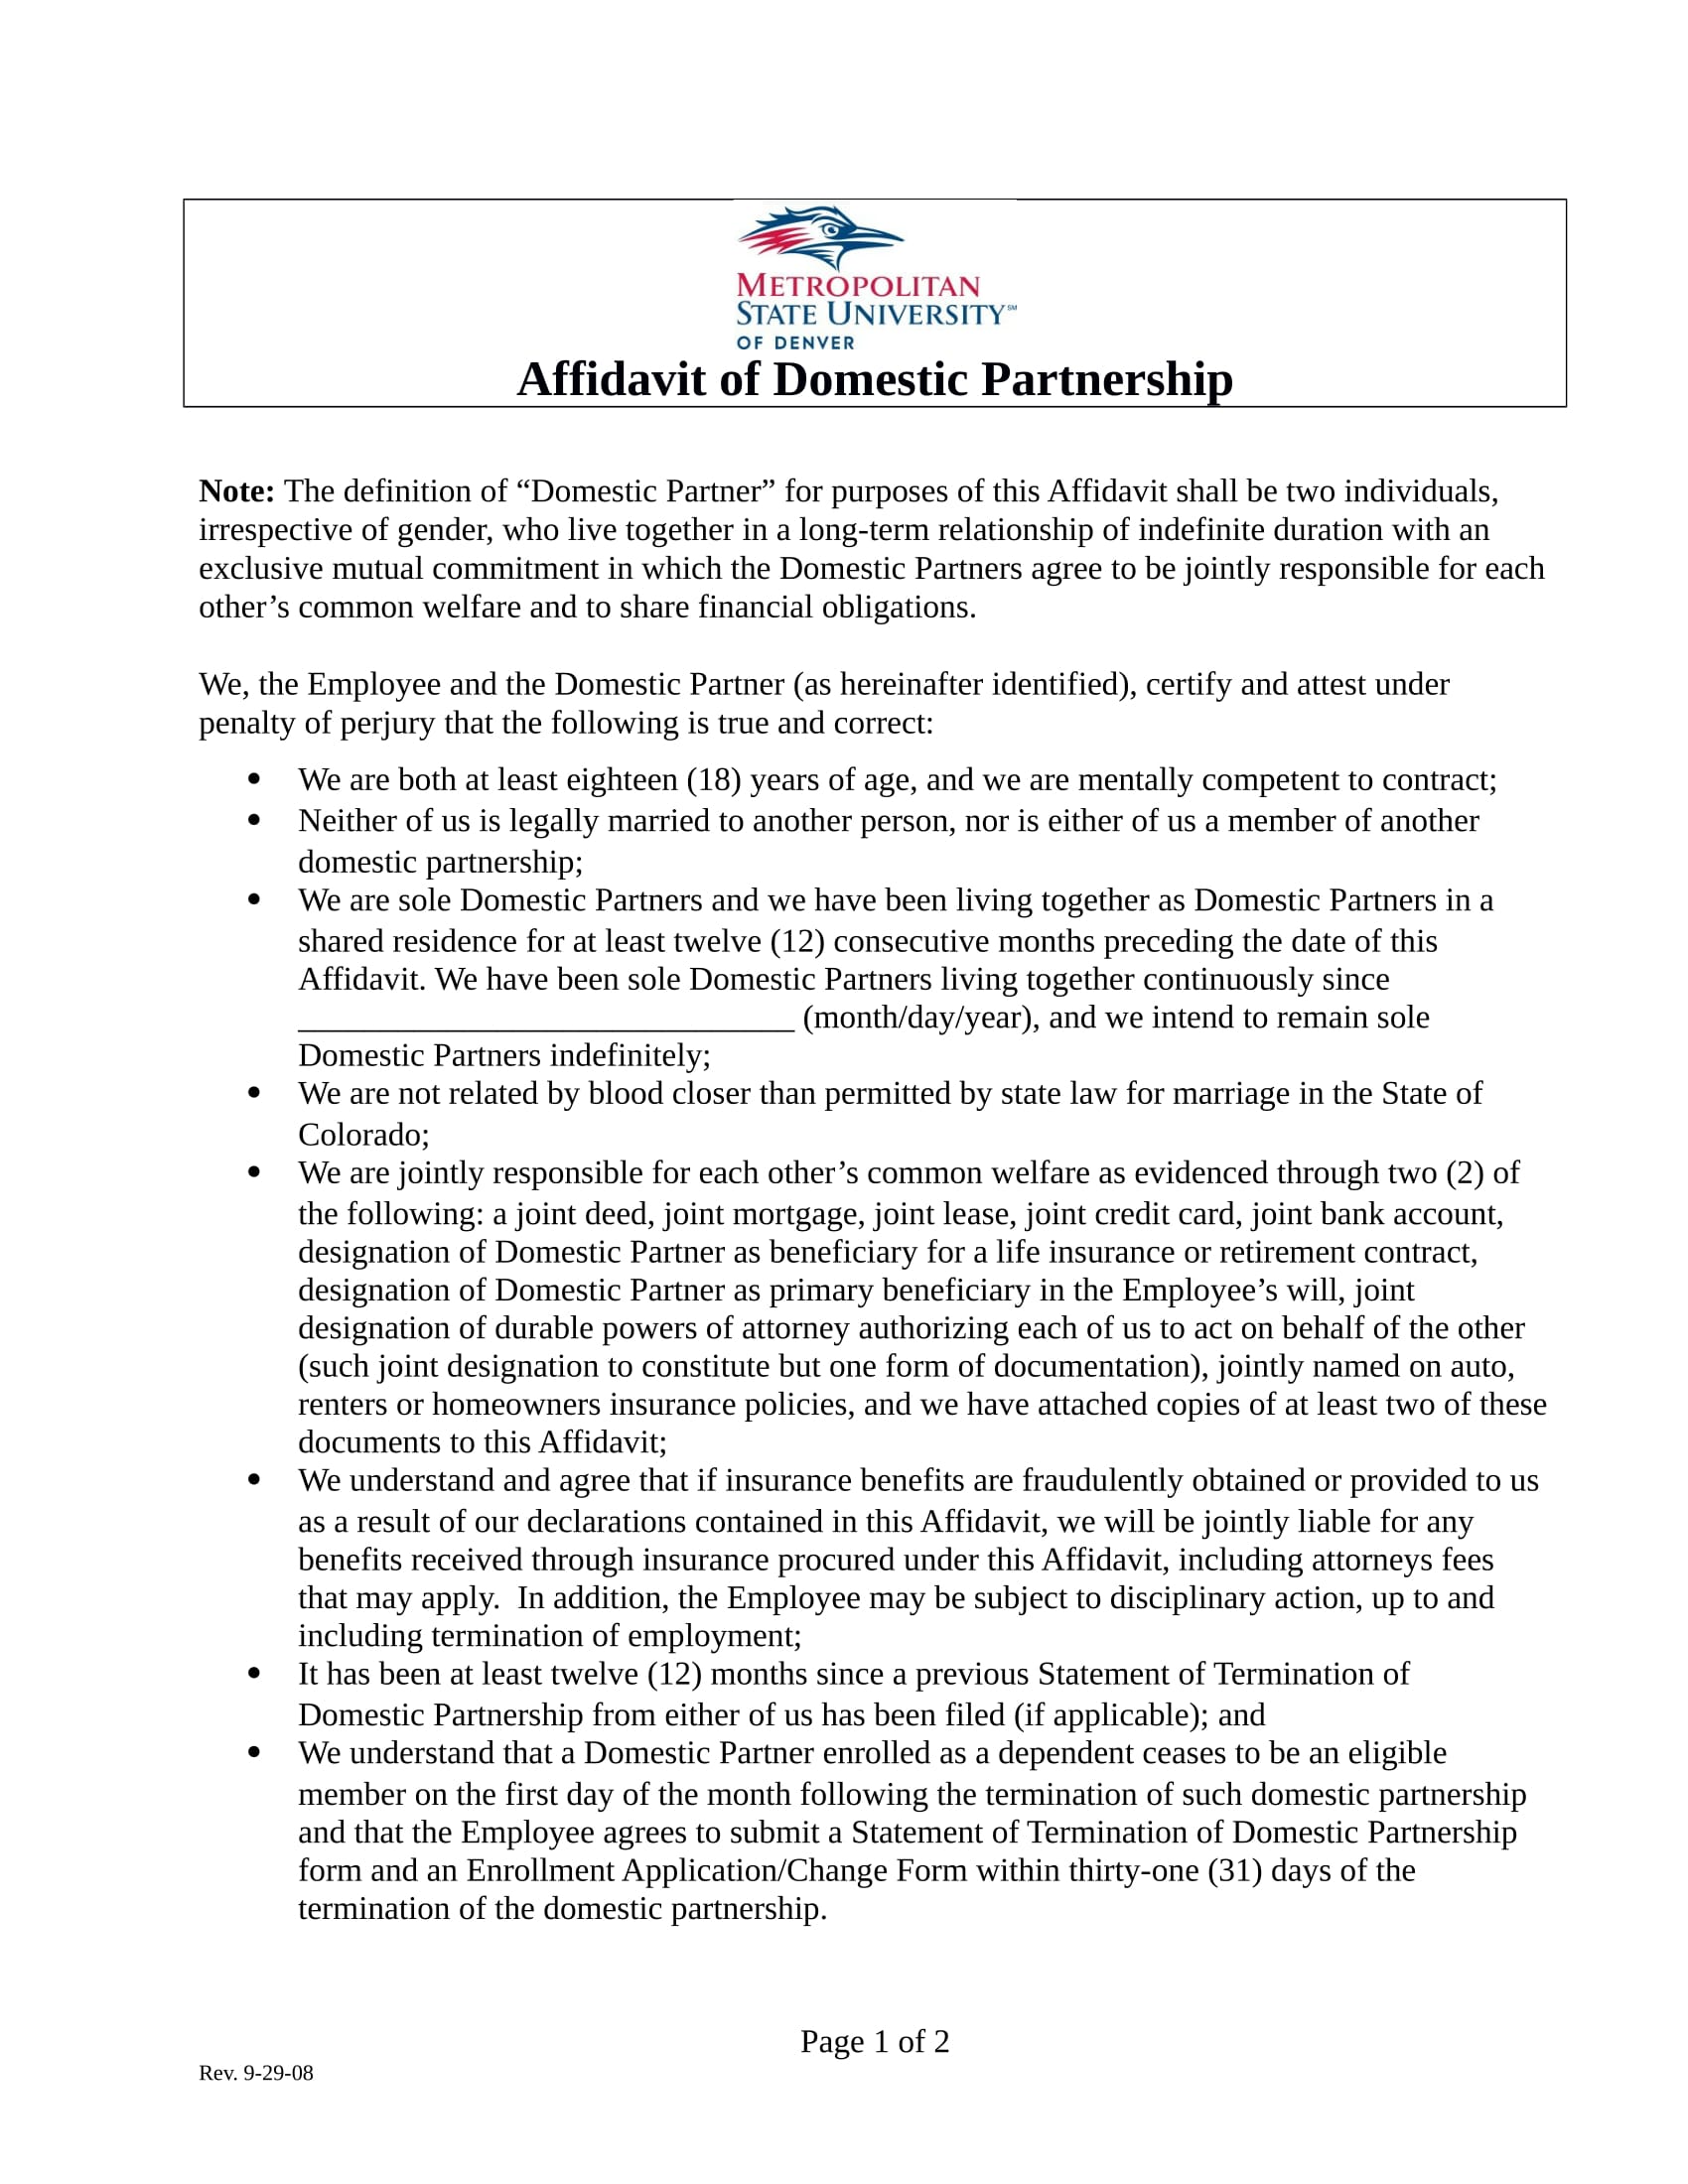 domestic partnership affidavit form sample 1